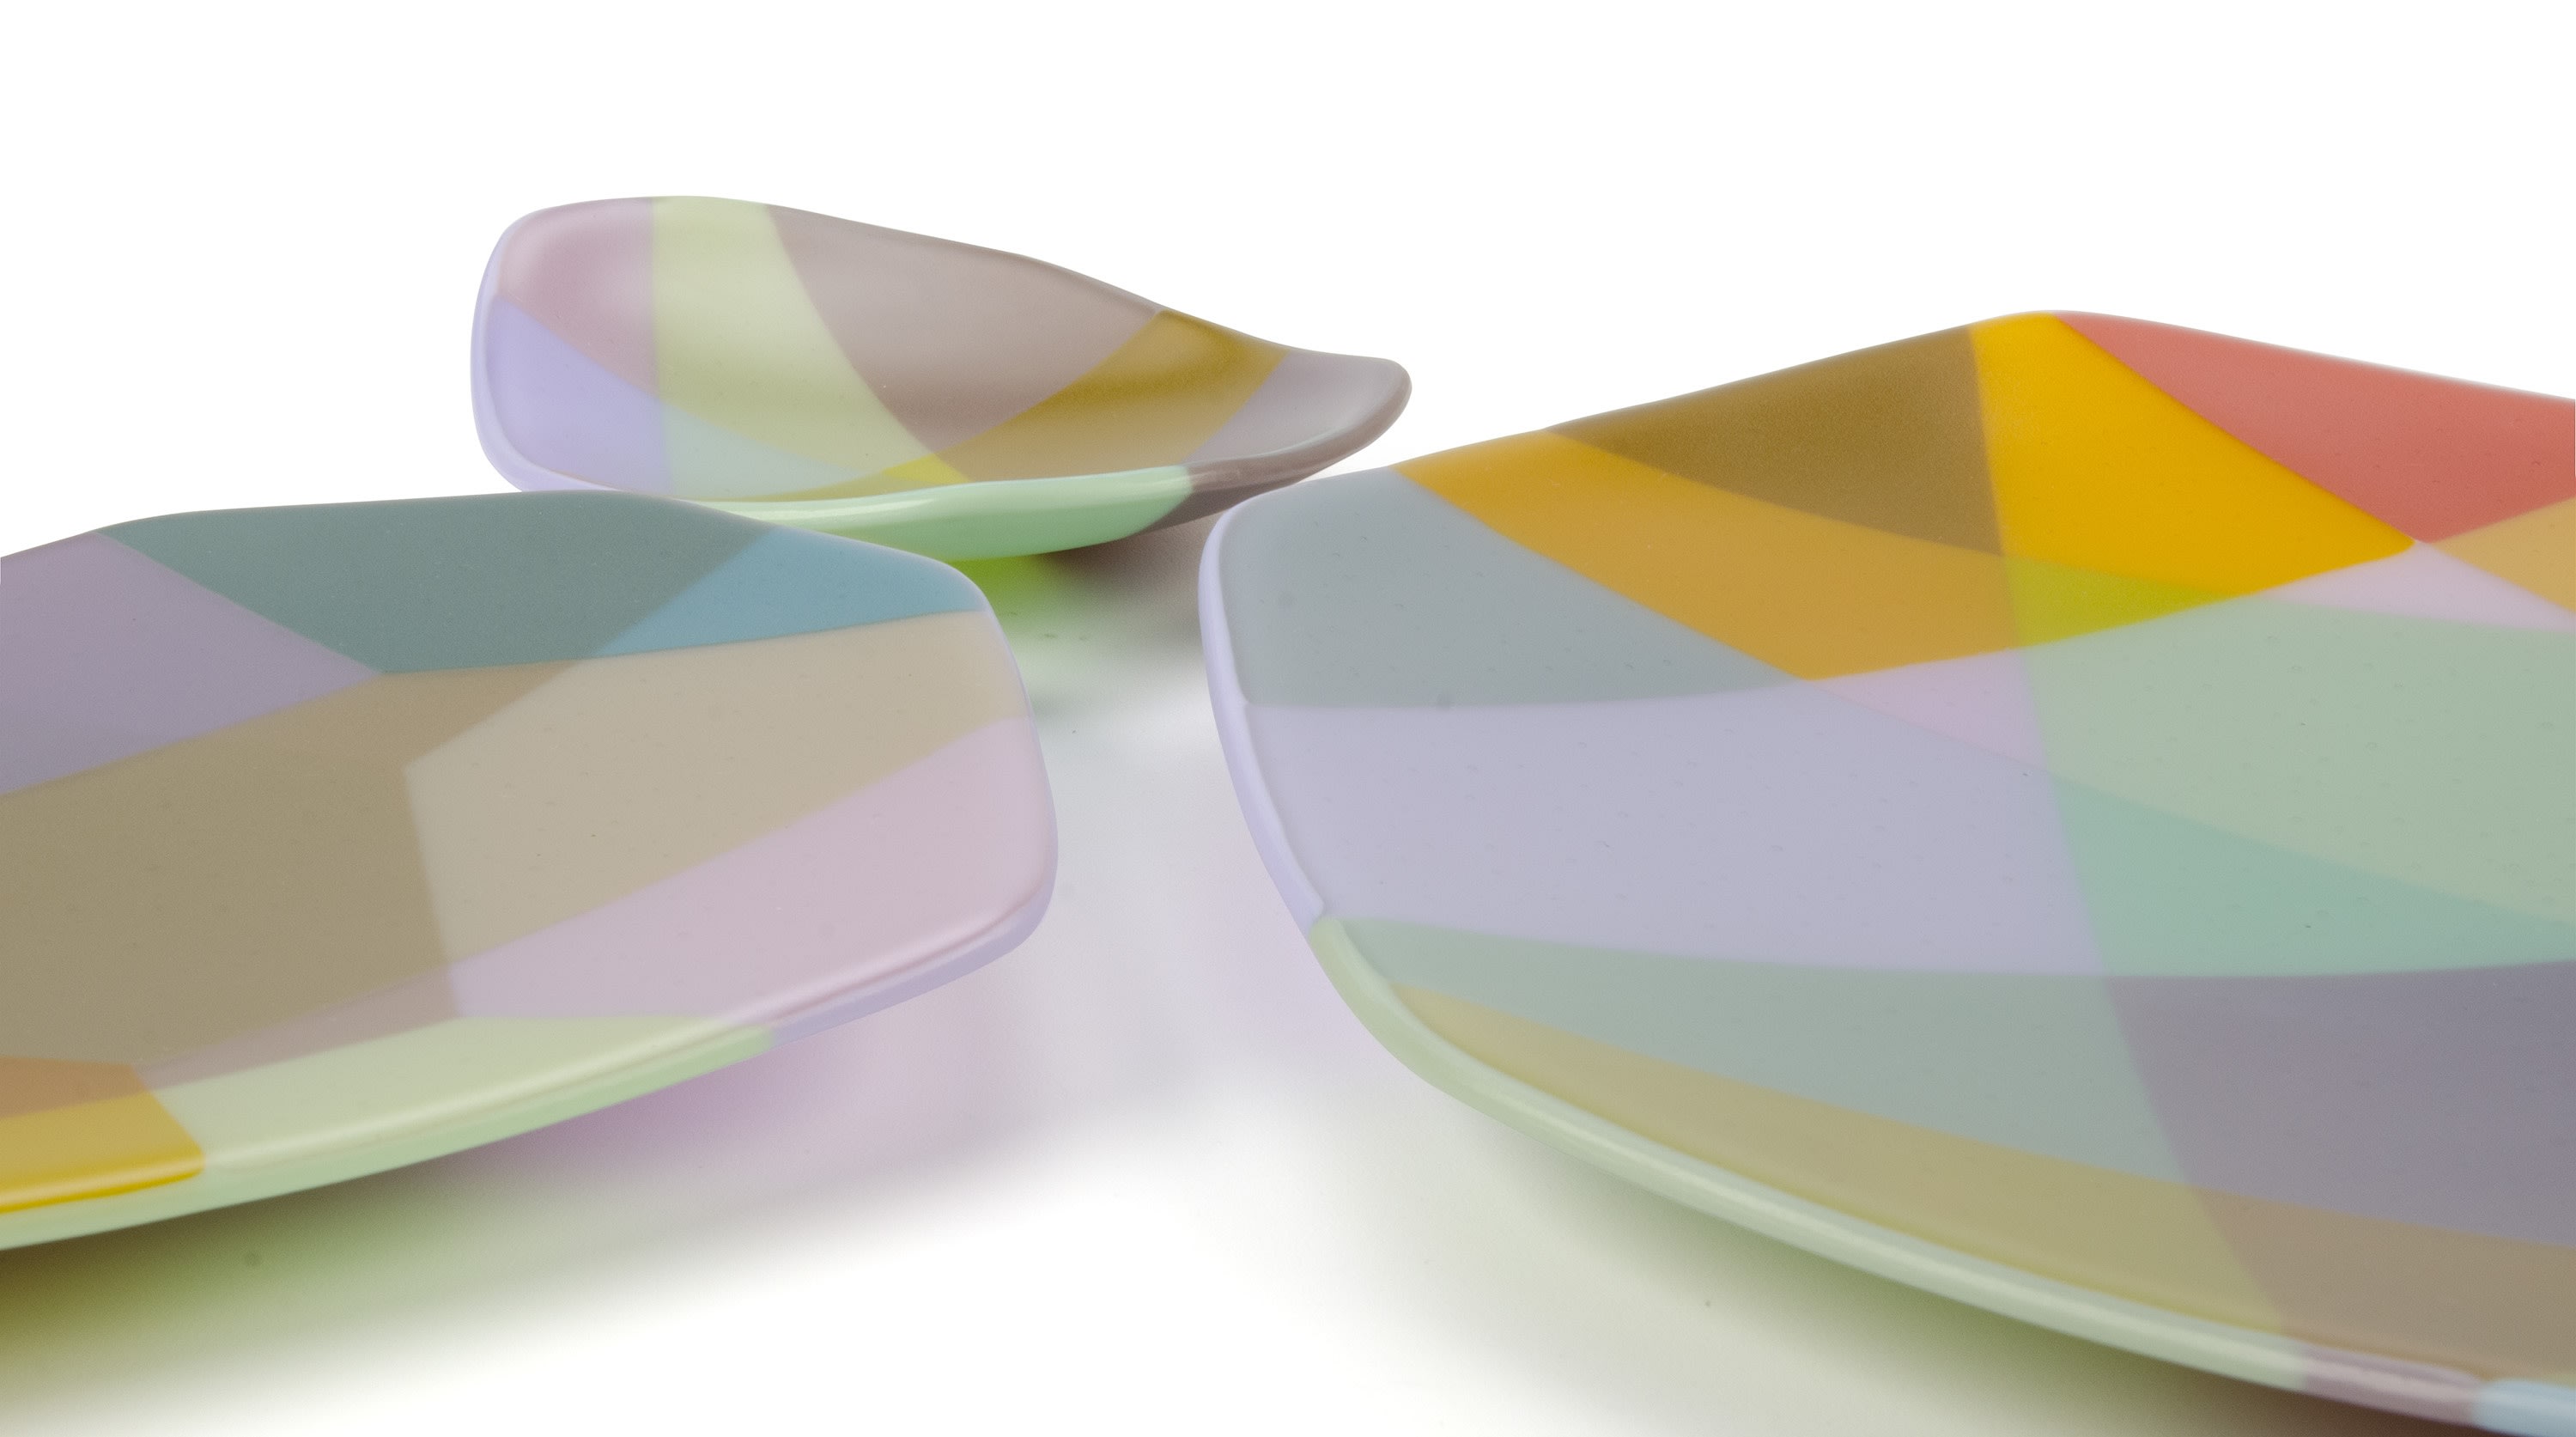 Anu Penttinen, Residency Platters (Muted), kilnformed glass